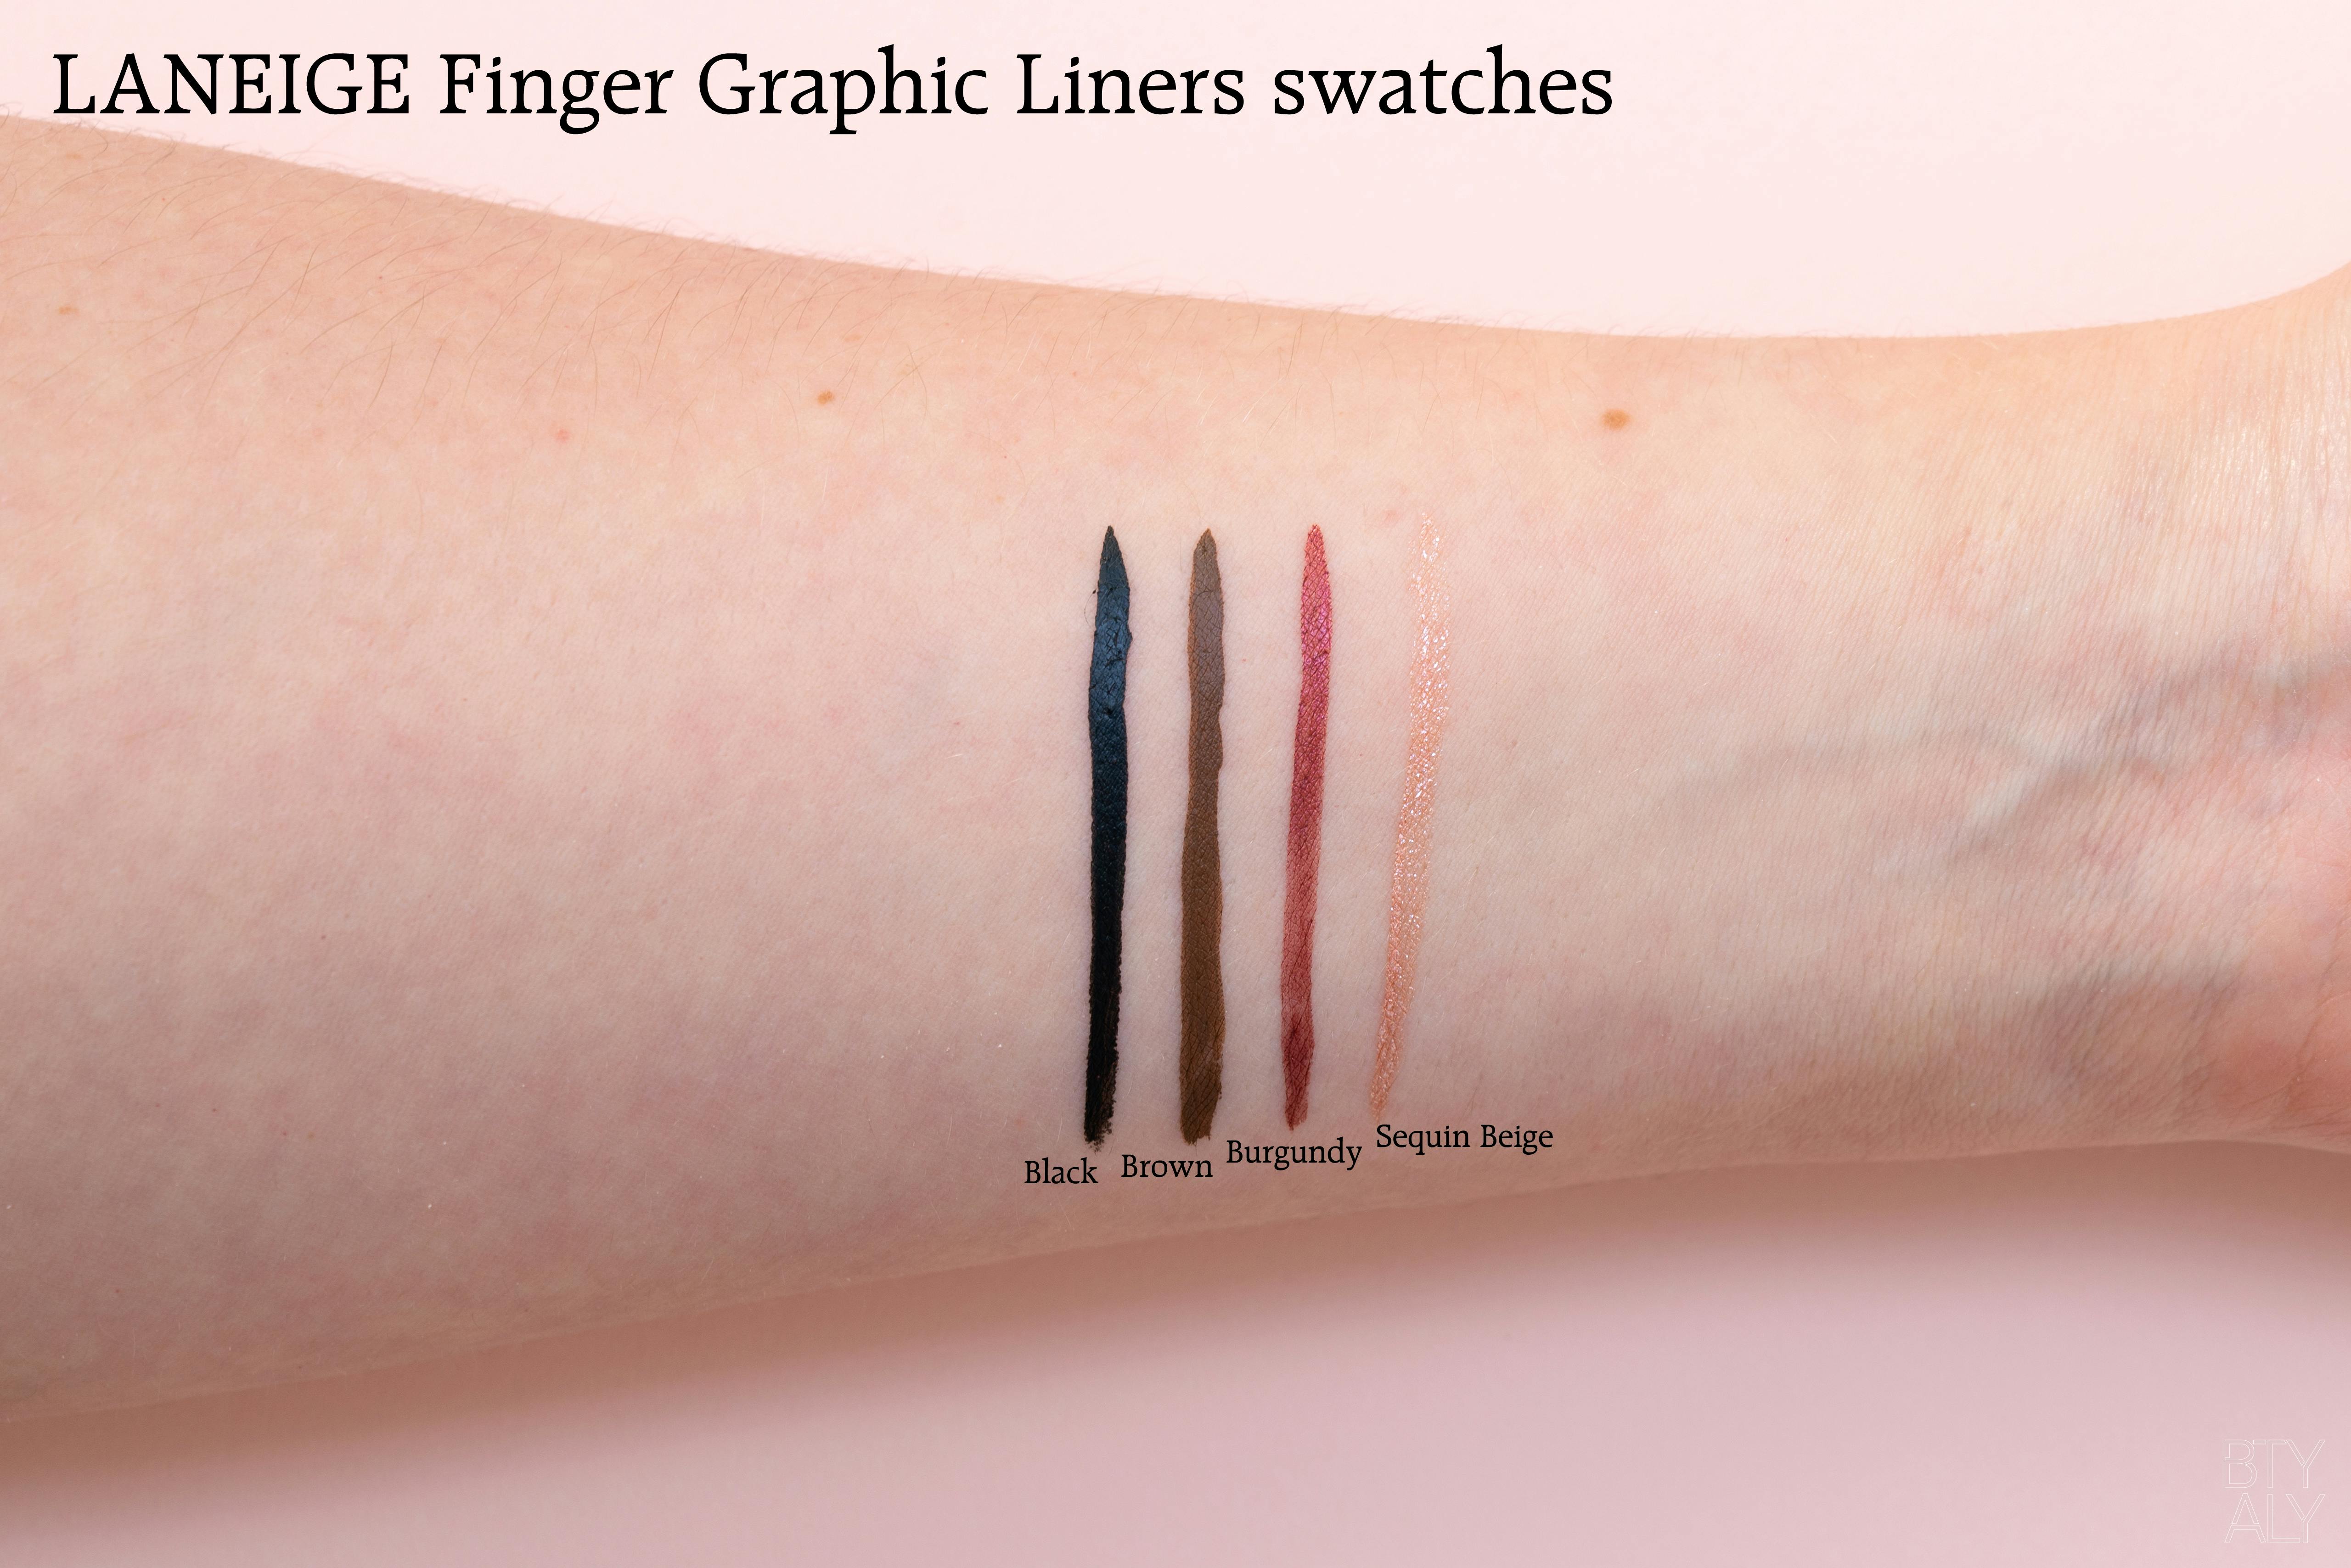 LANEIGE Finger Graphic Liner Black, Brown, Burgundy, Sequin Beige swatches